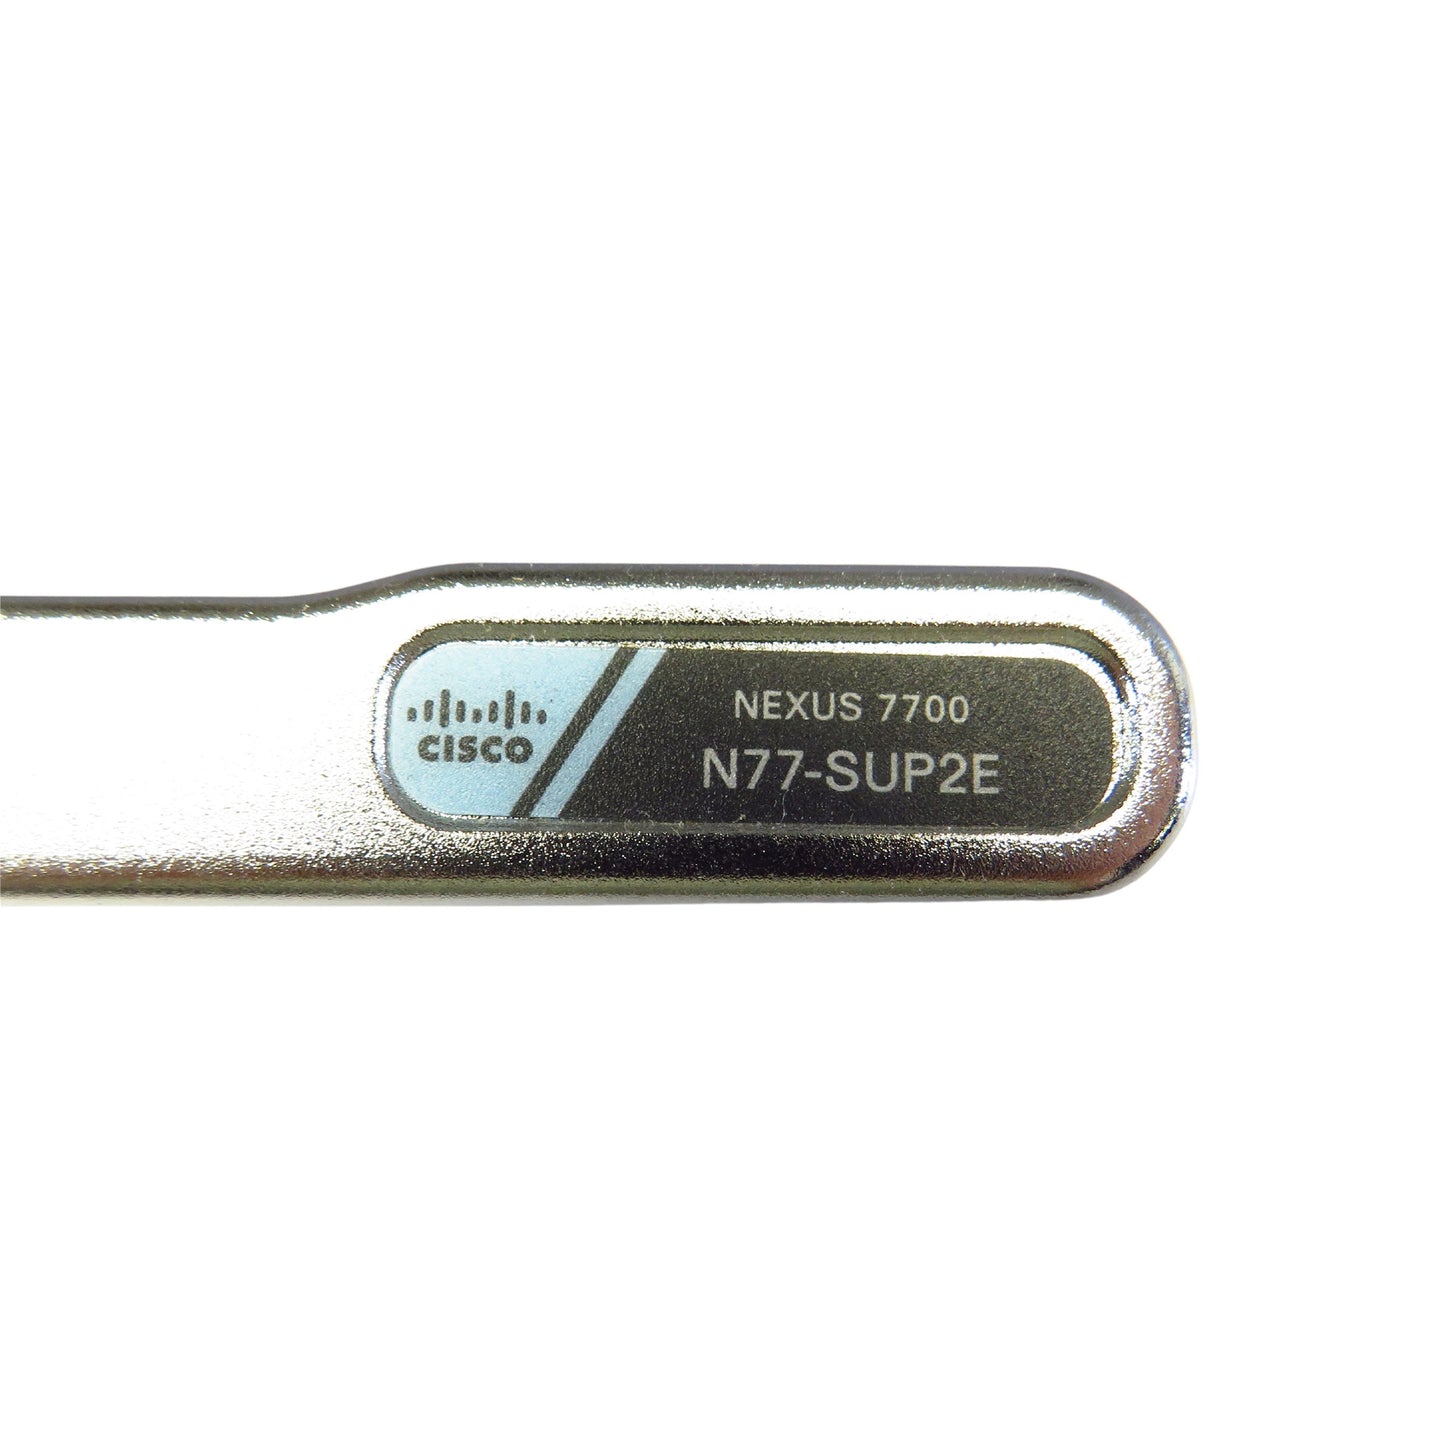 Cisco N77-SUP2E Nexus 7700 Switch Supervisor2 Enhanced Module (Refurbished)